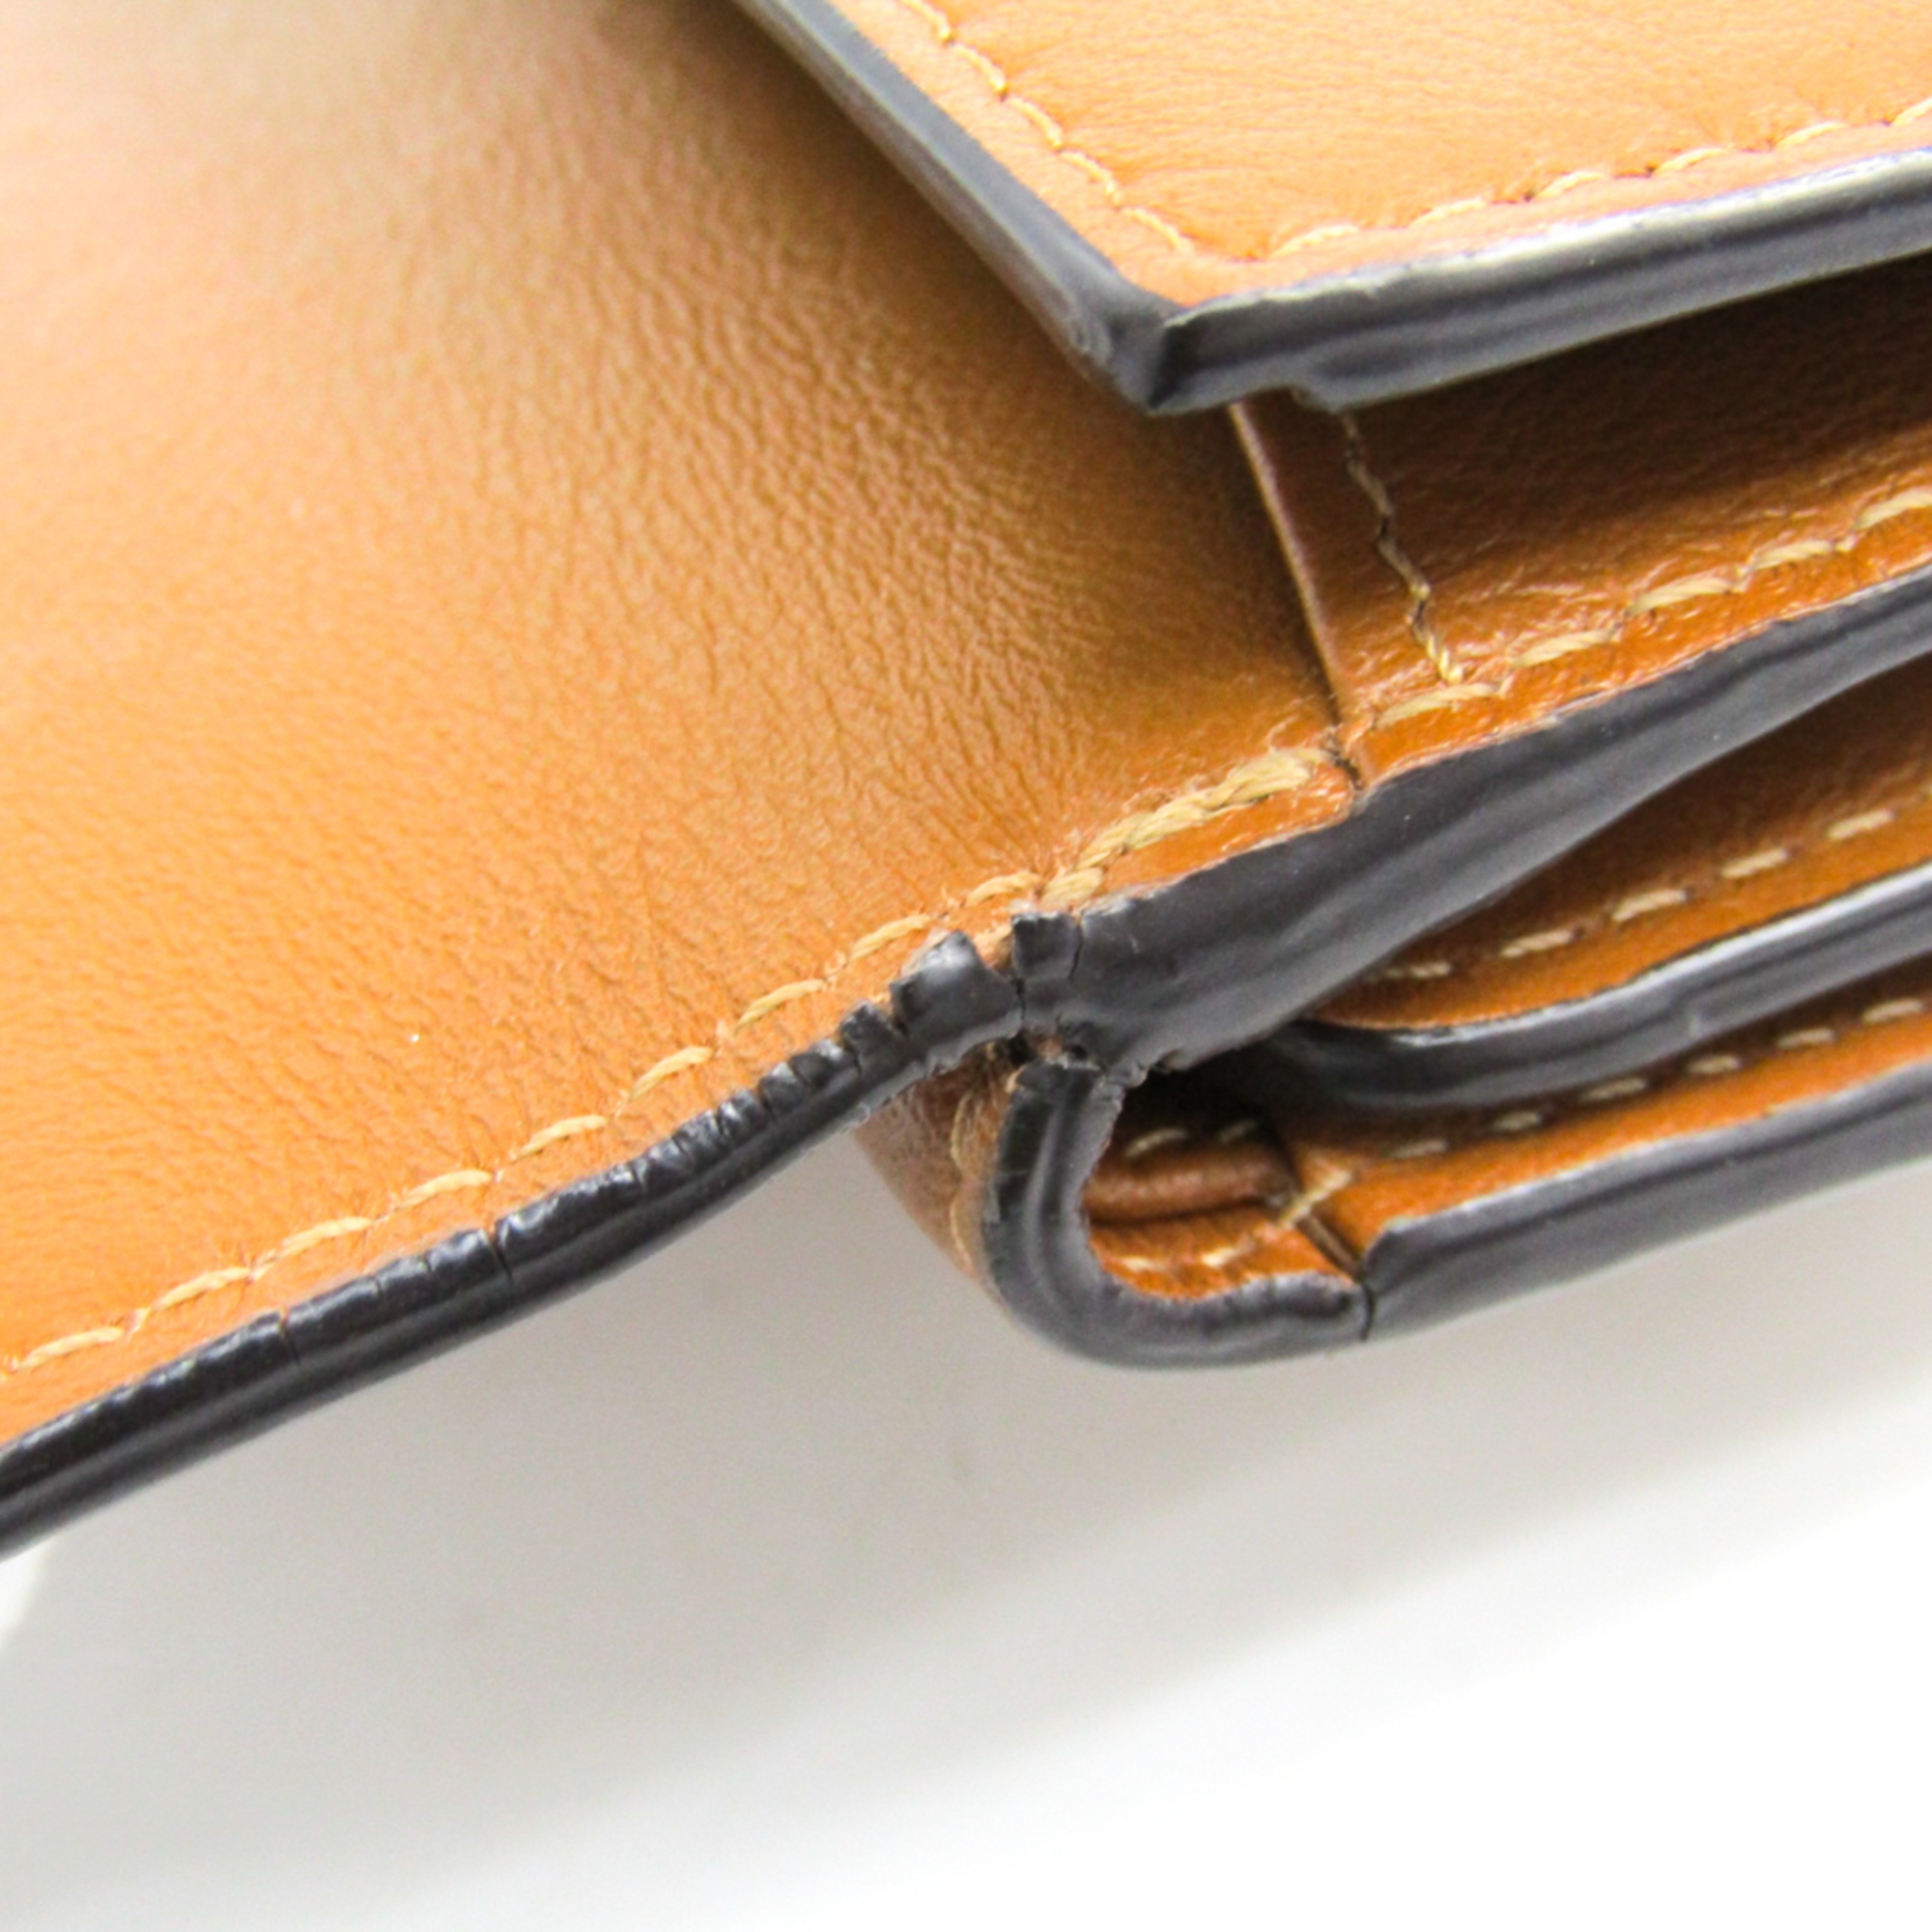 Chloé Nicole 3P0912 Women's Leather Wallet (tri-fold) Brown